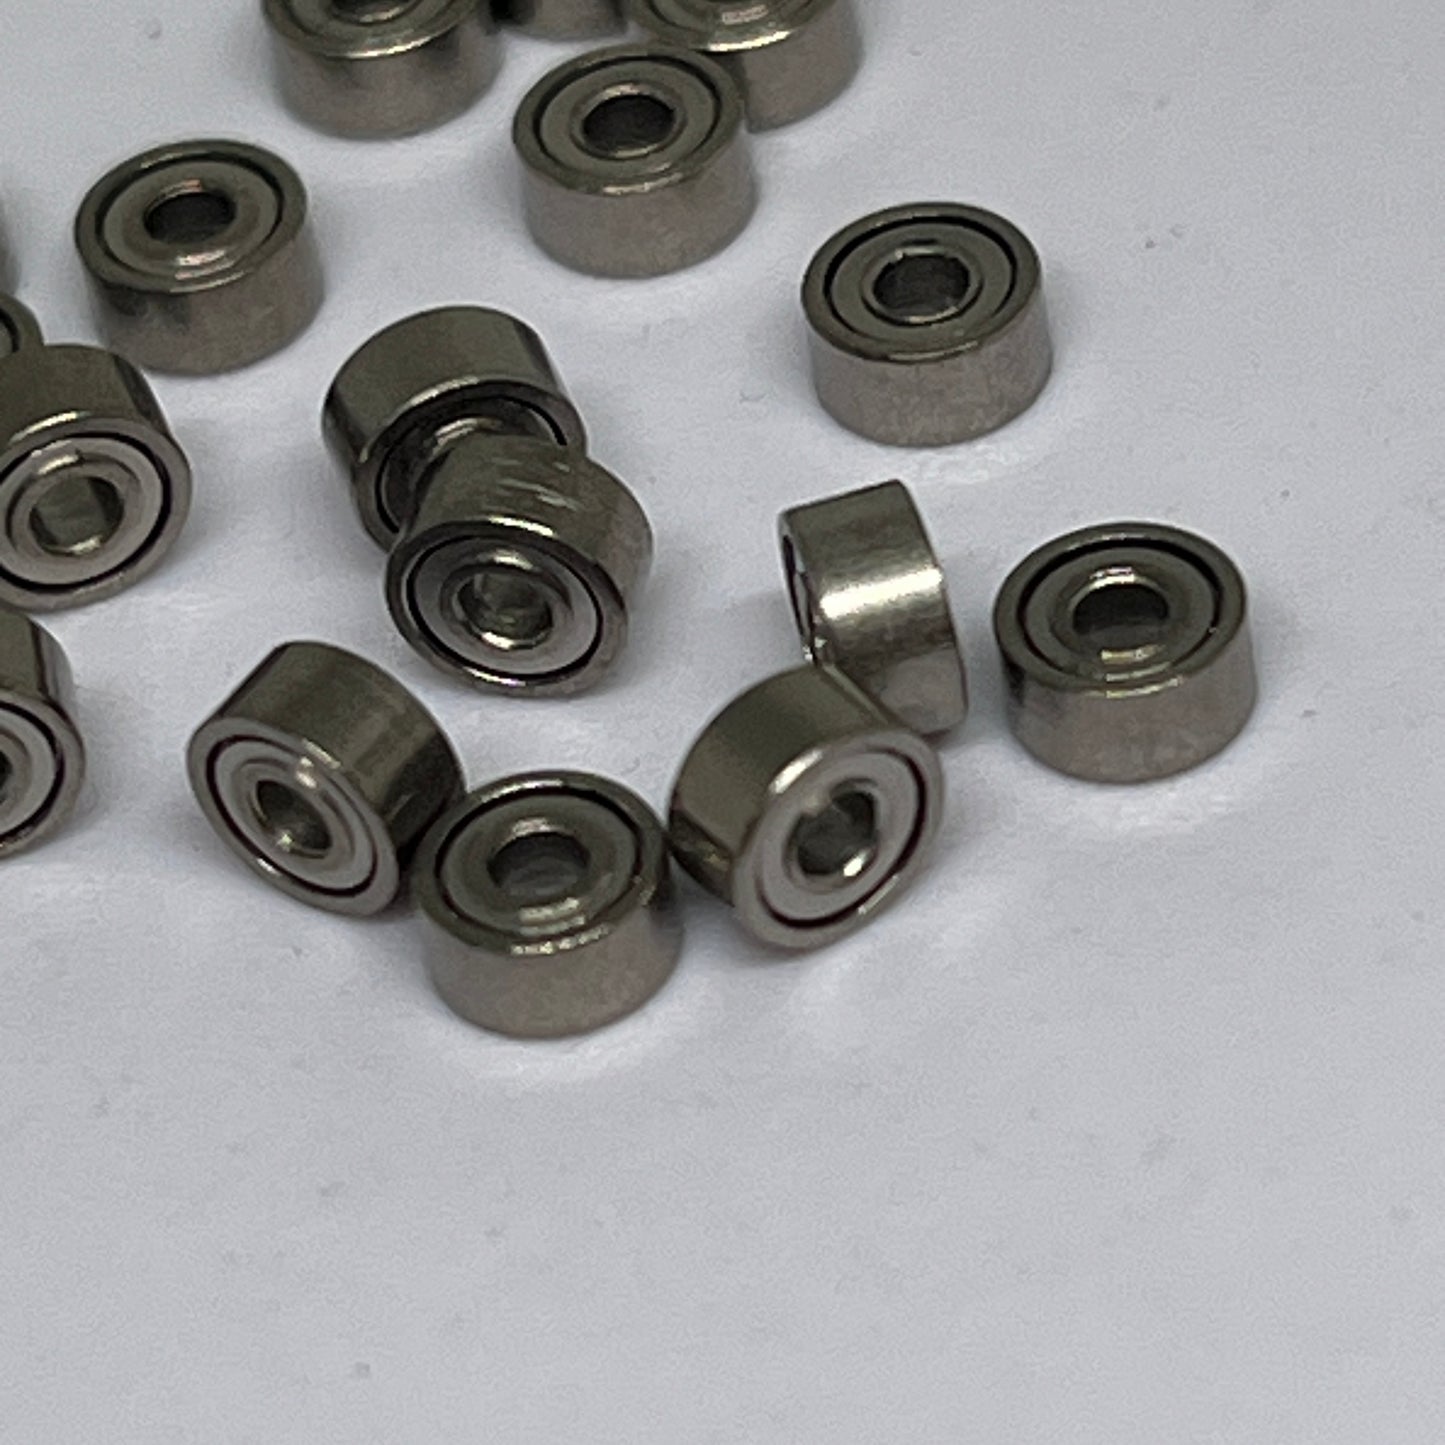 20 pcs Super spin bearing for fingerboard wheels